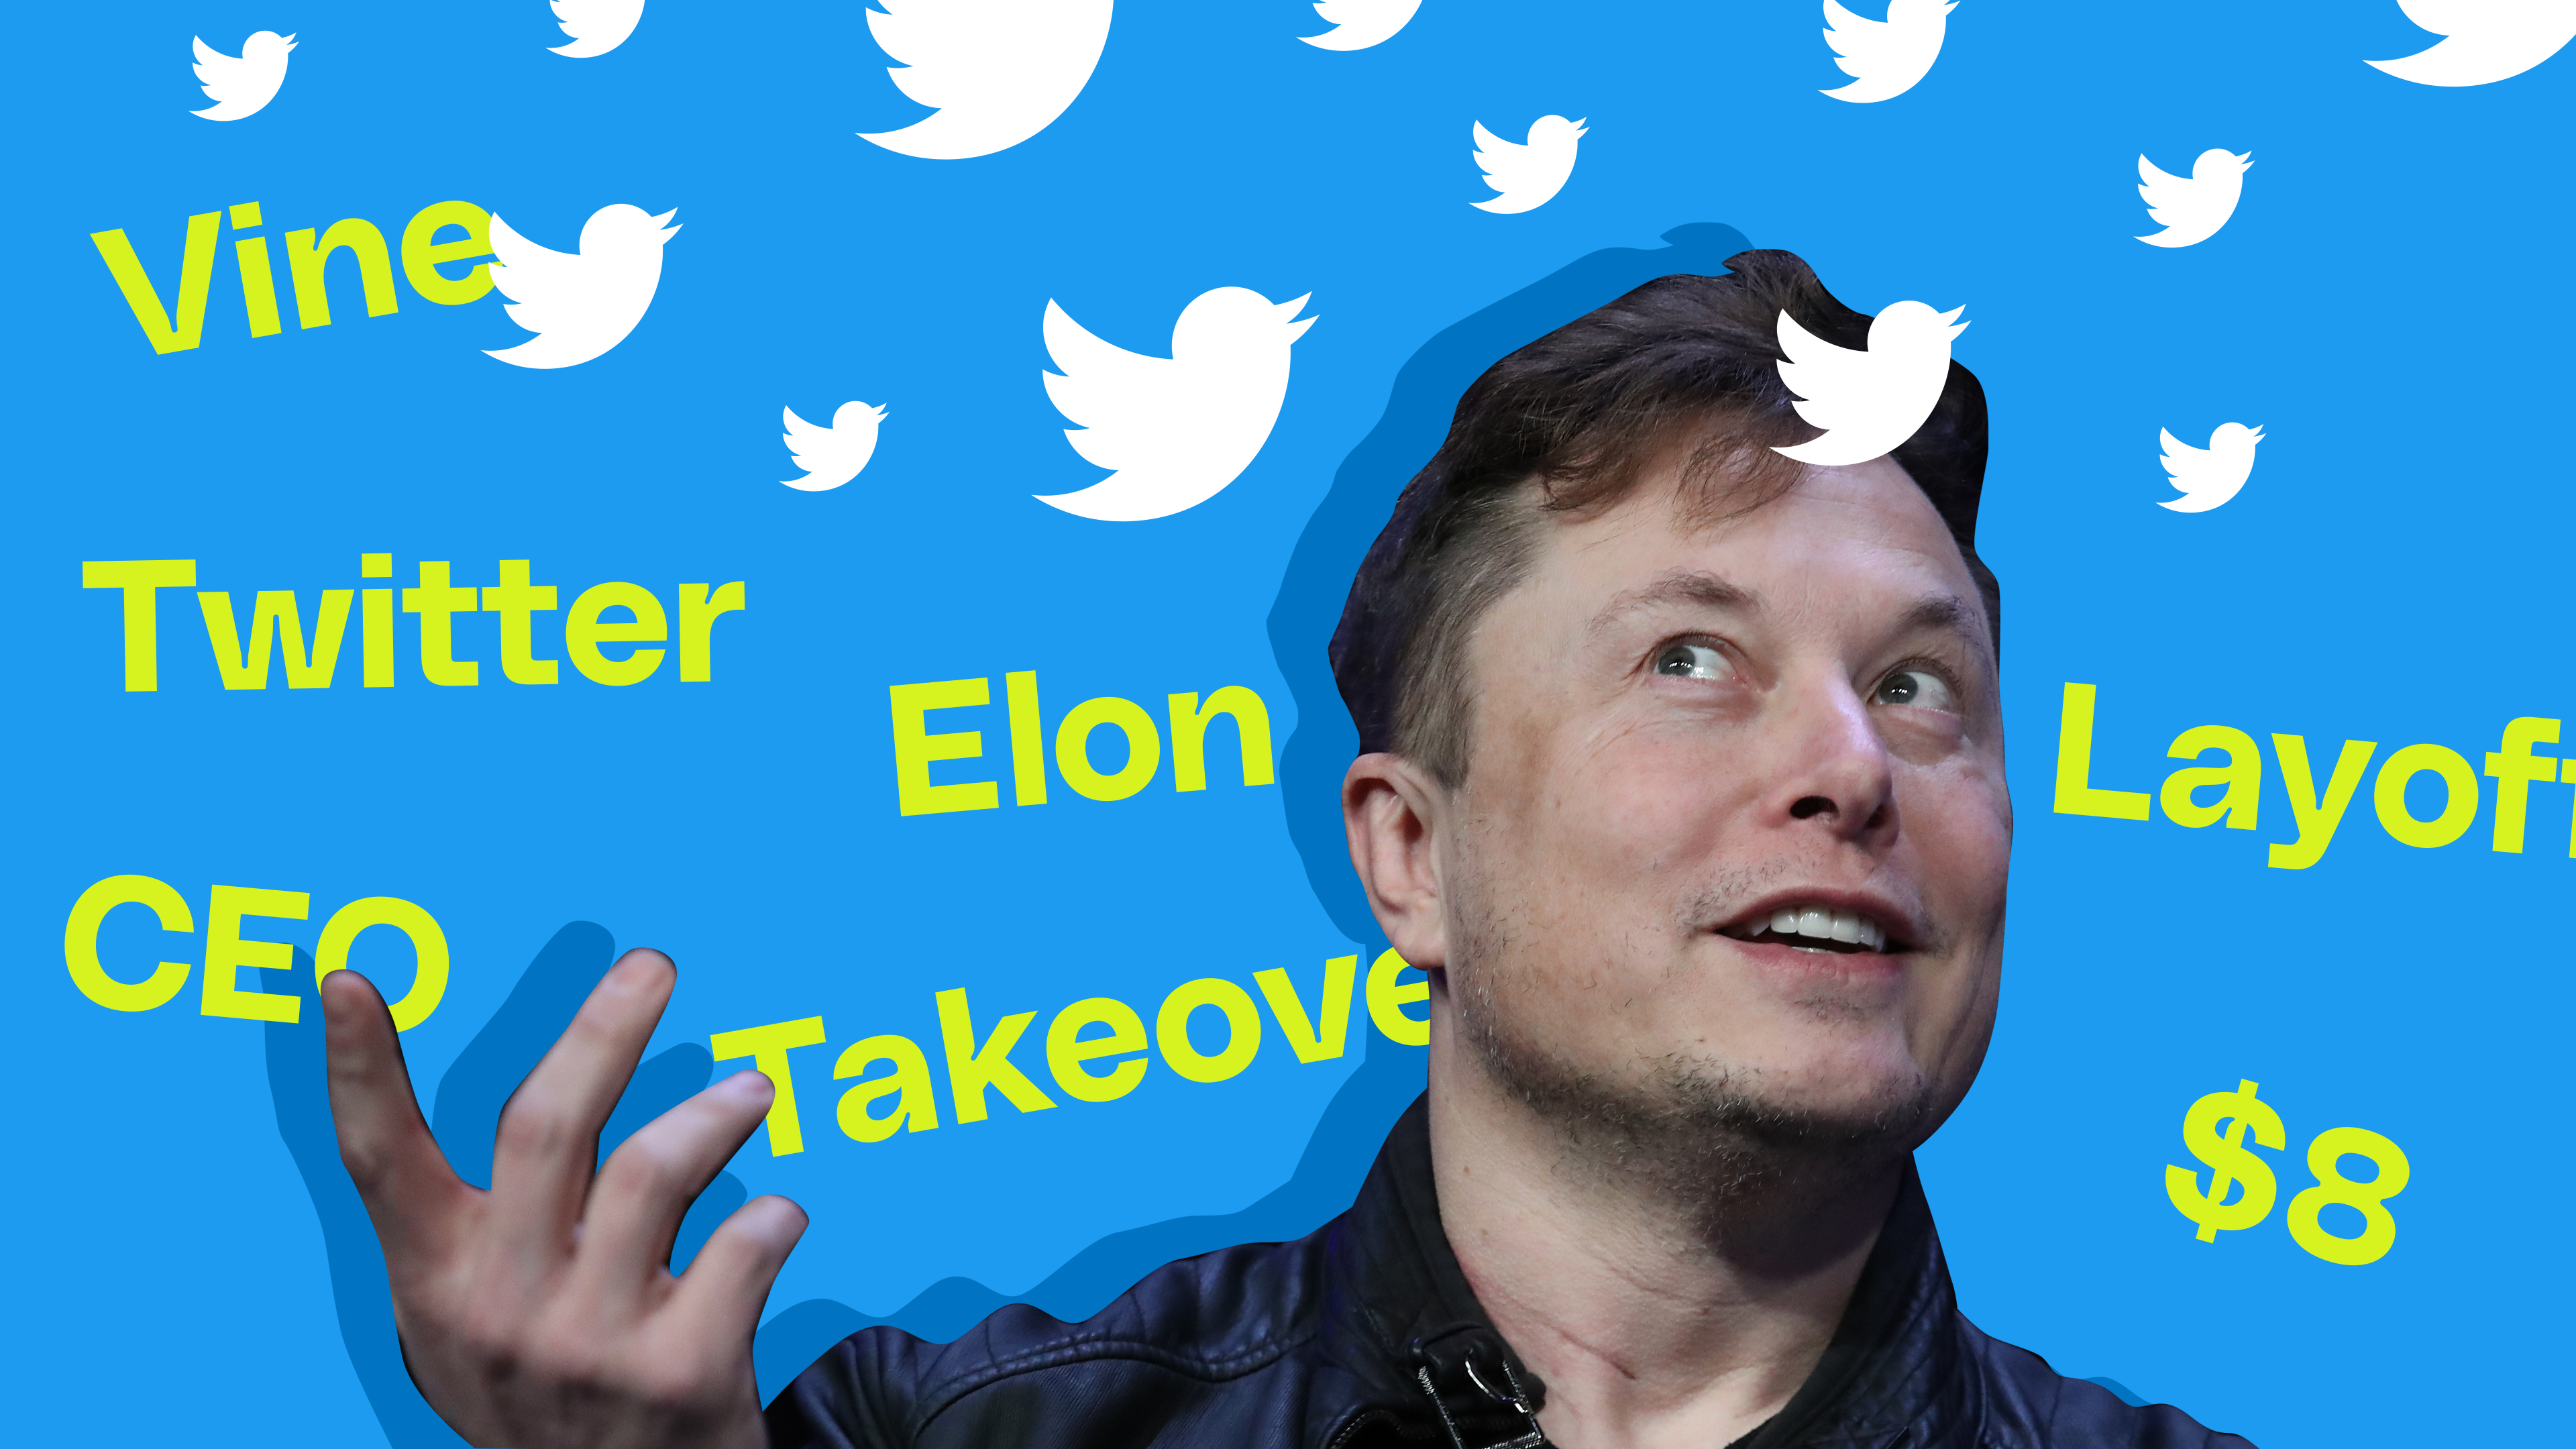 Twitter Verified Check Mark Meme (Elon Musk) 8$ Price Tag - Twitter -  Sticker